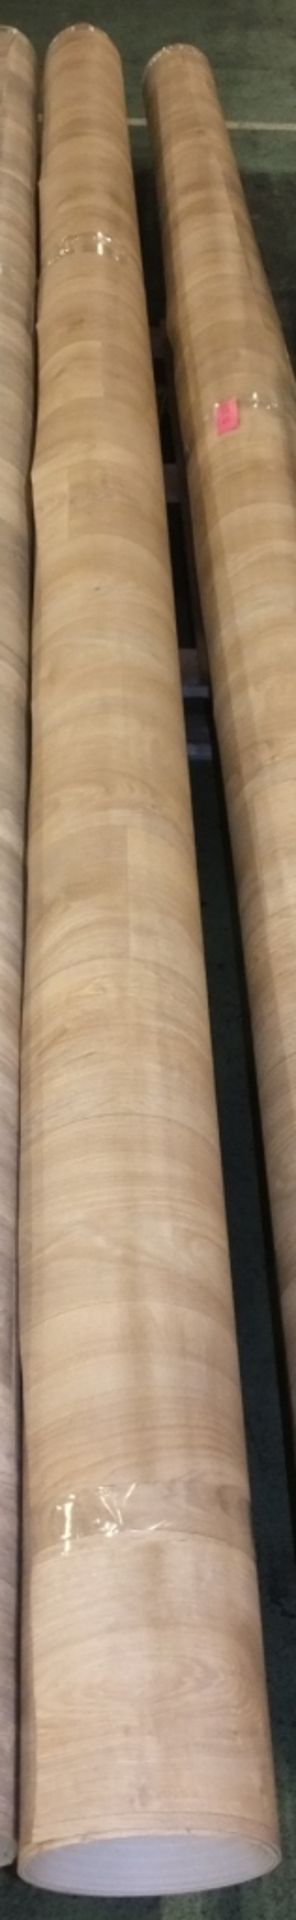 Wood Effect Vinyl Flooring - Approx 4M x 8.5M